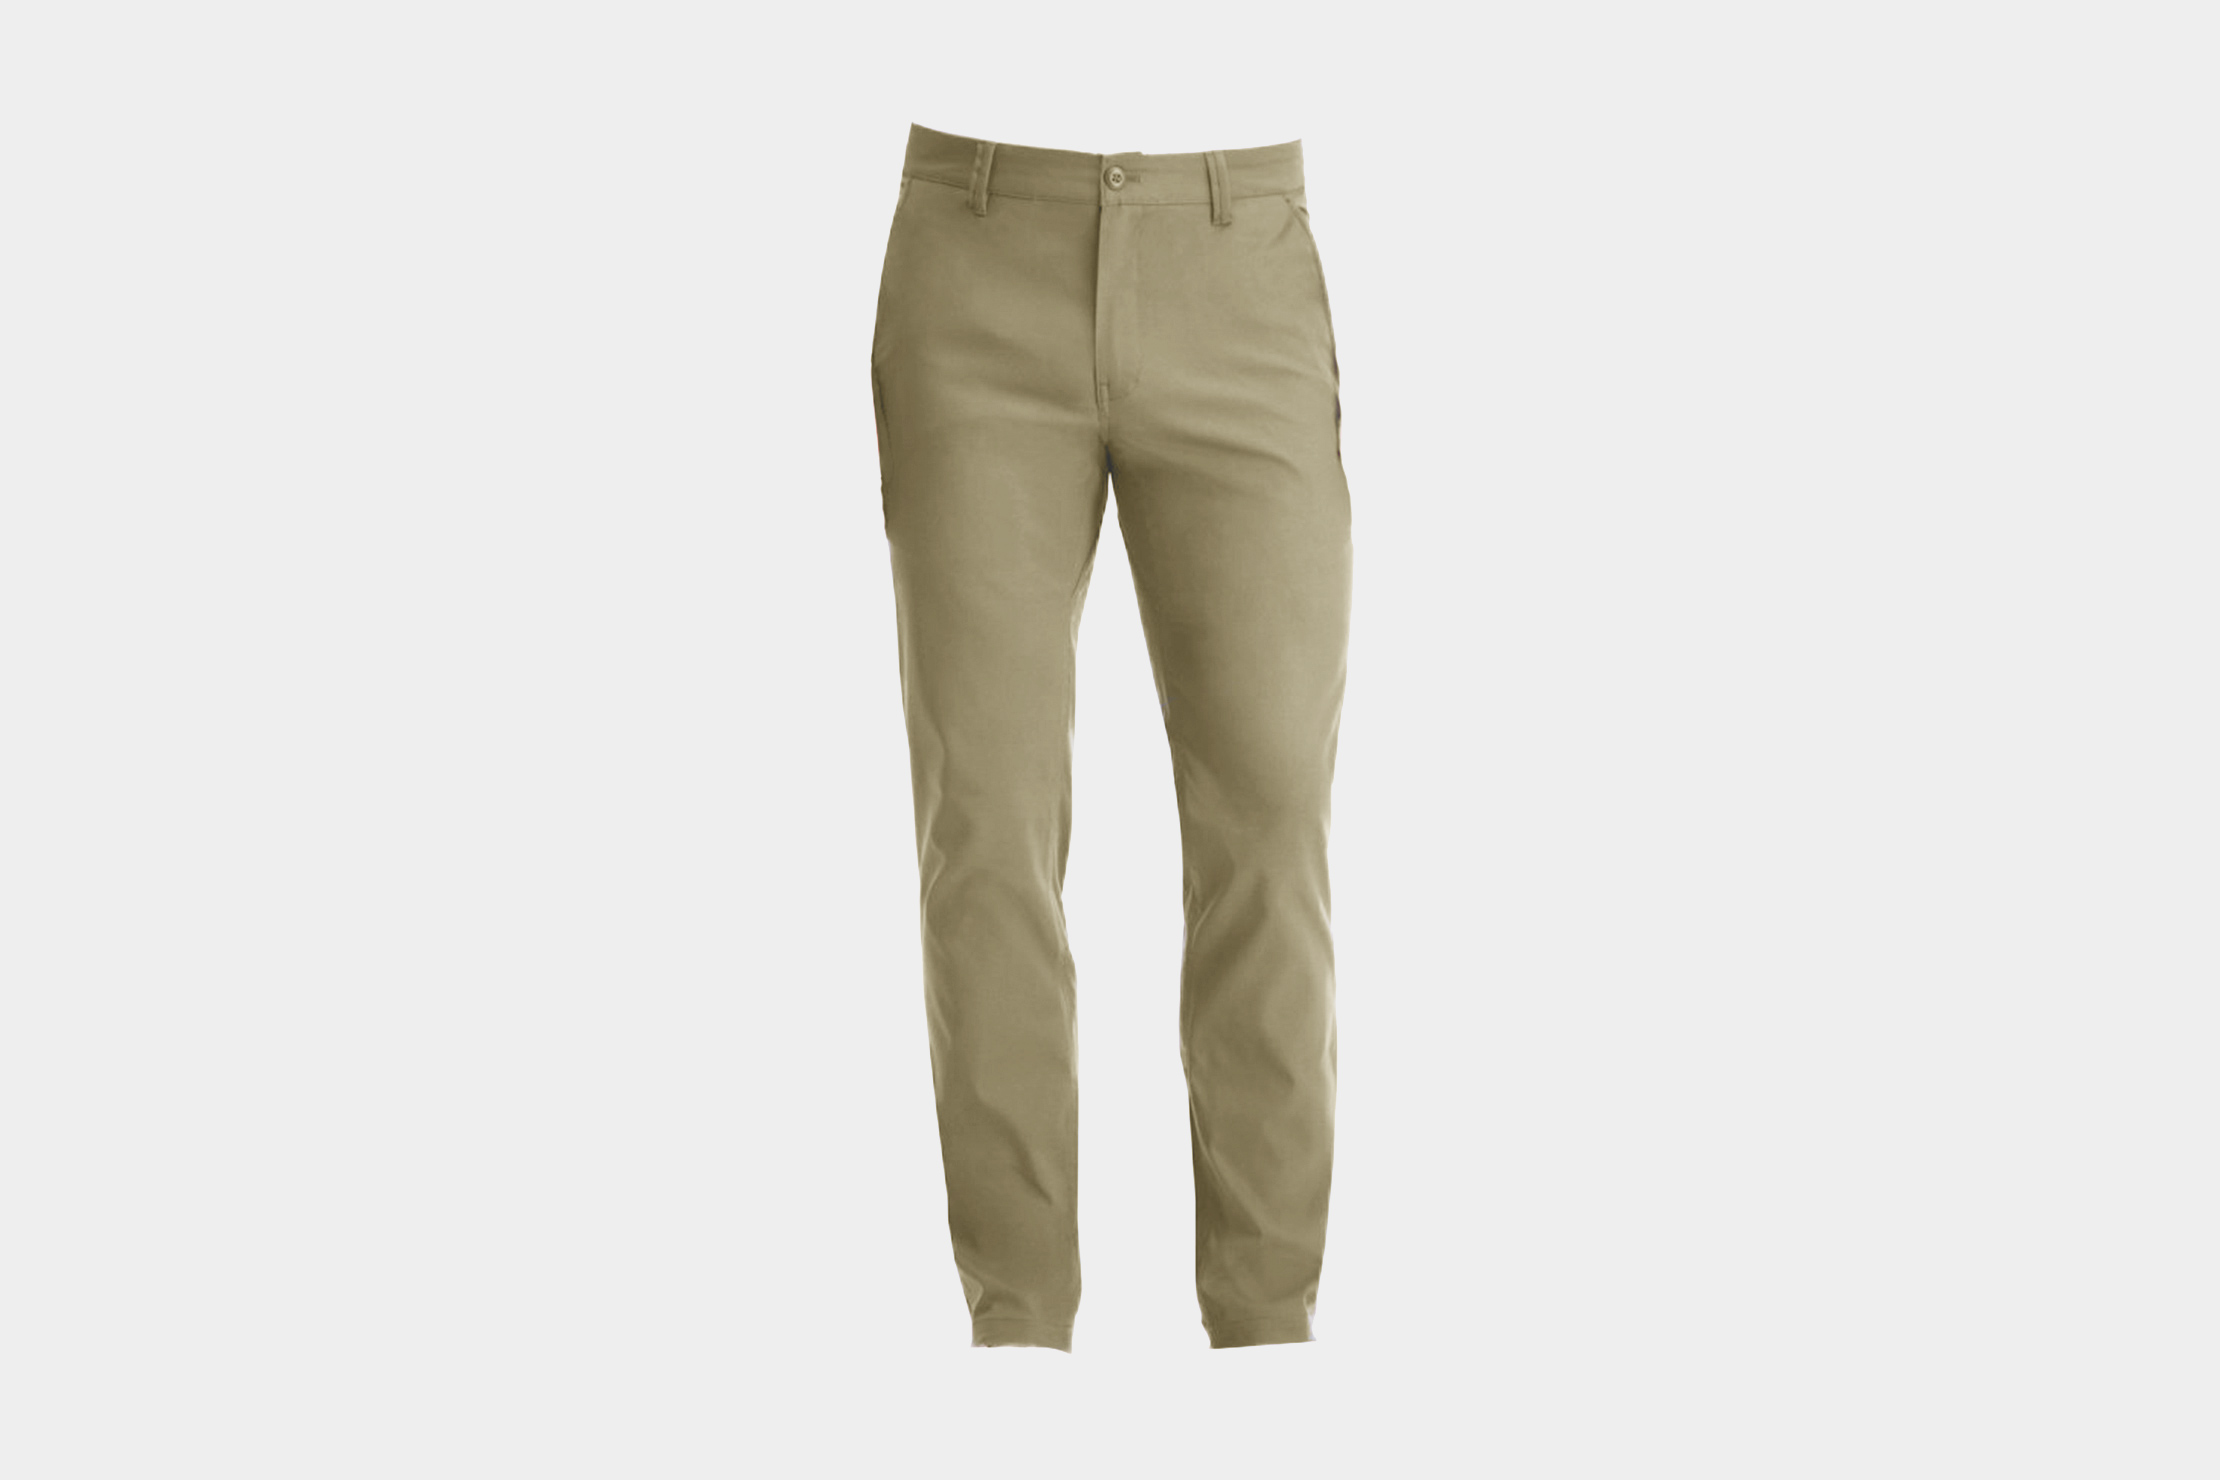 Bluffworks Ascender Chino Regular Fit Pants Men's Size 36/34